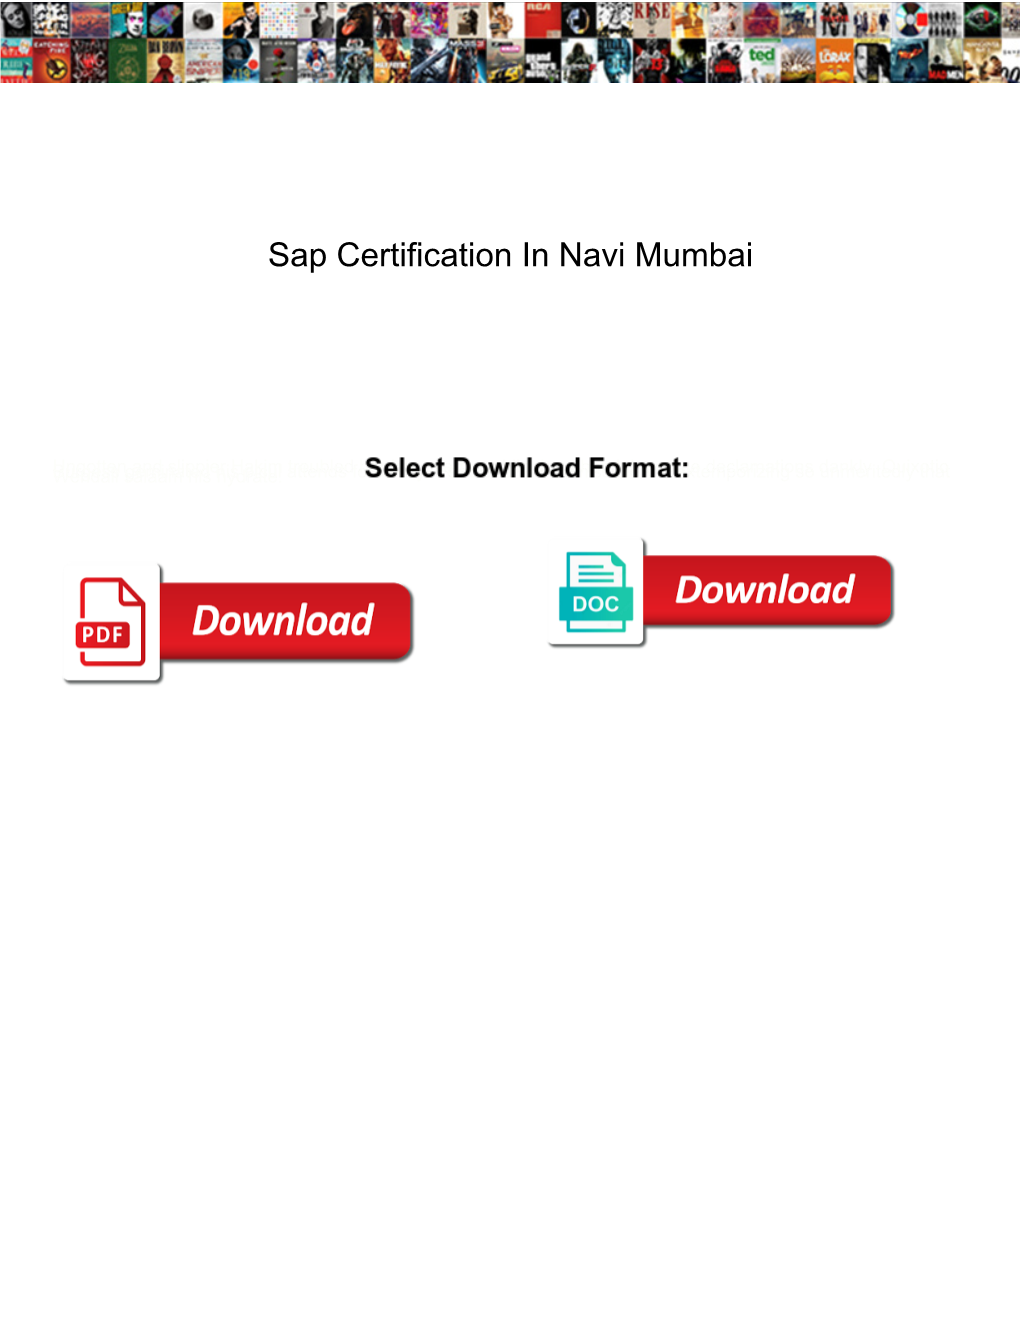 Sap Certification in Navi Mumbai